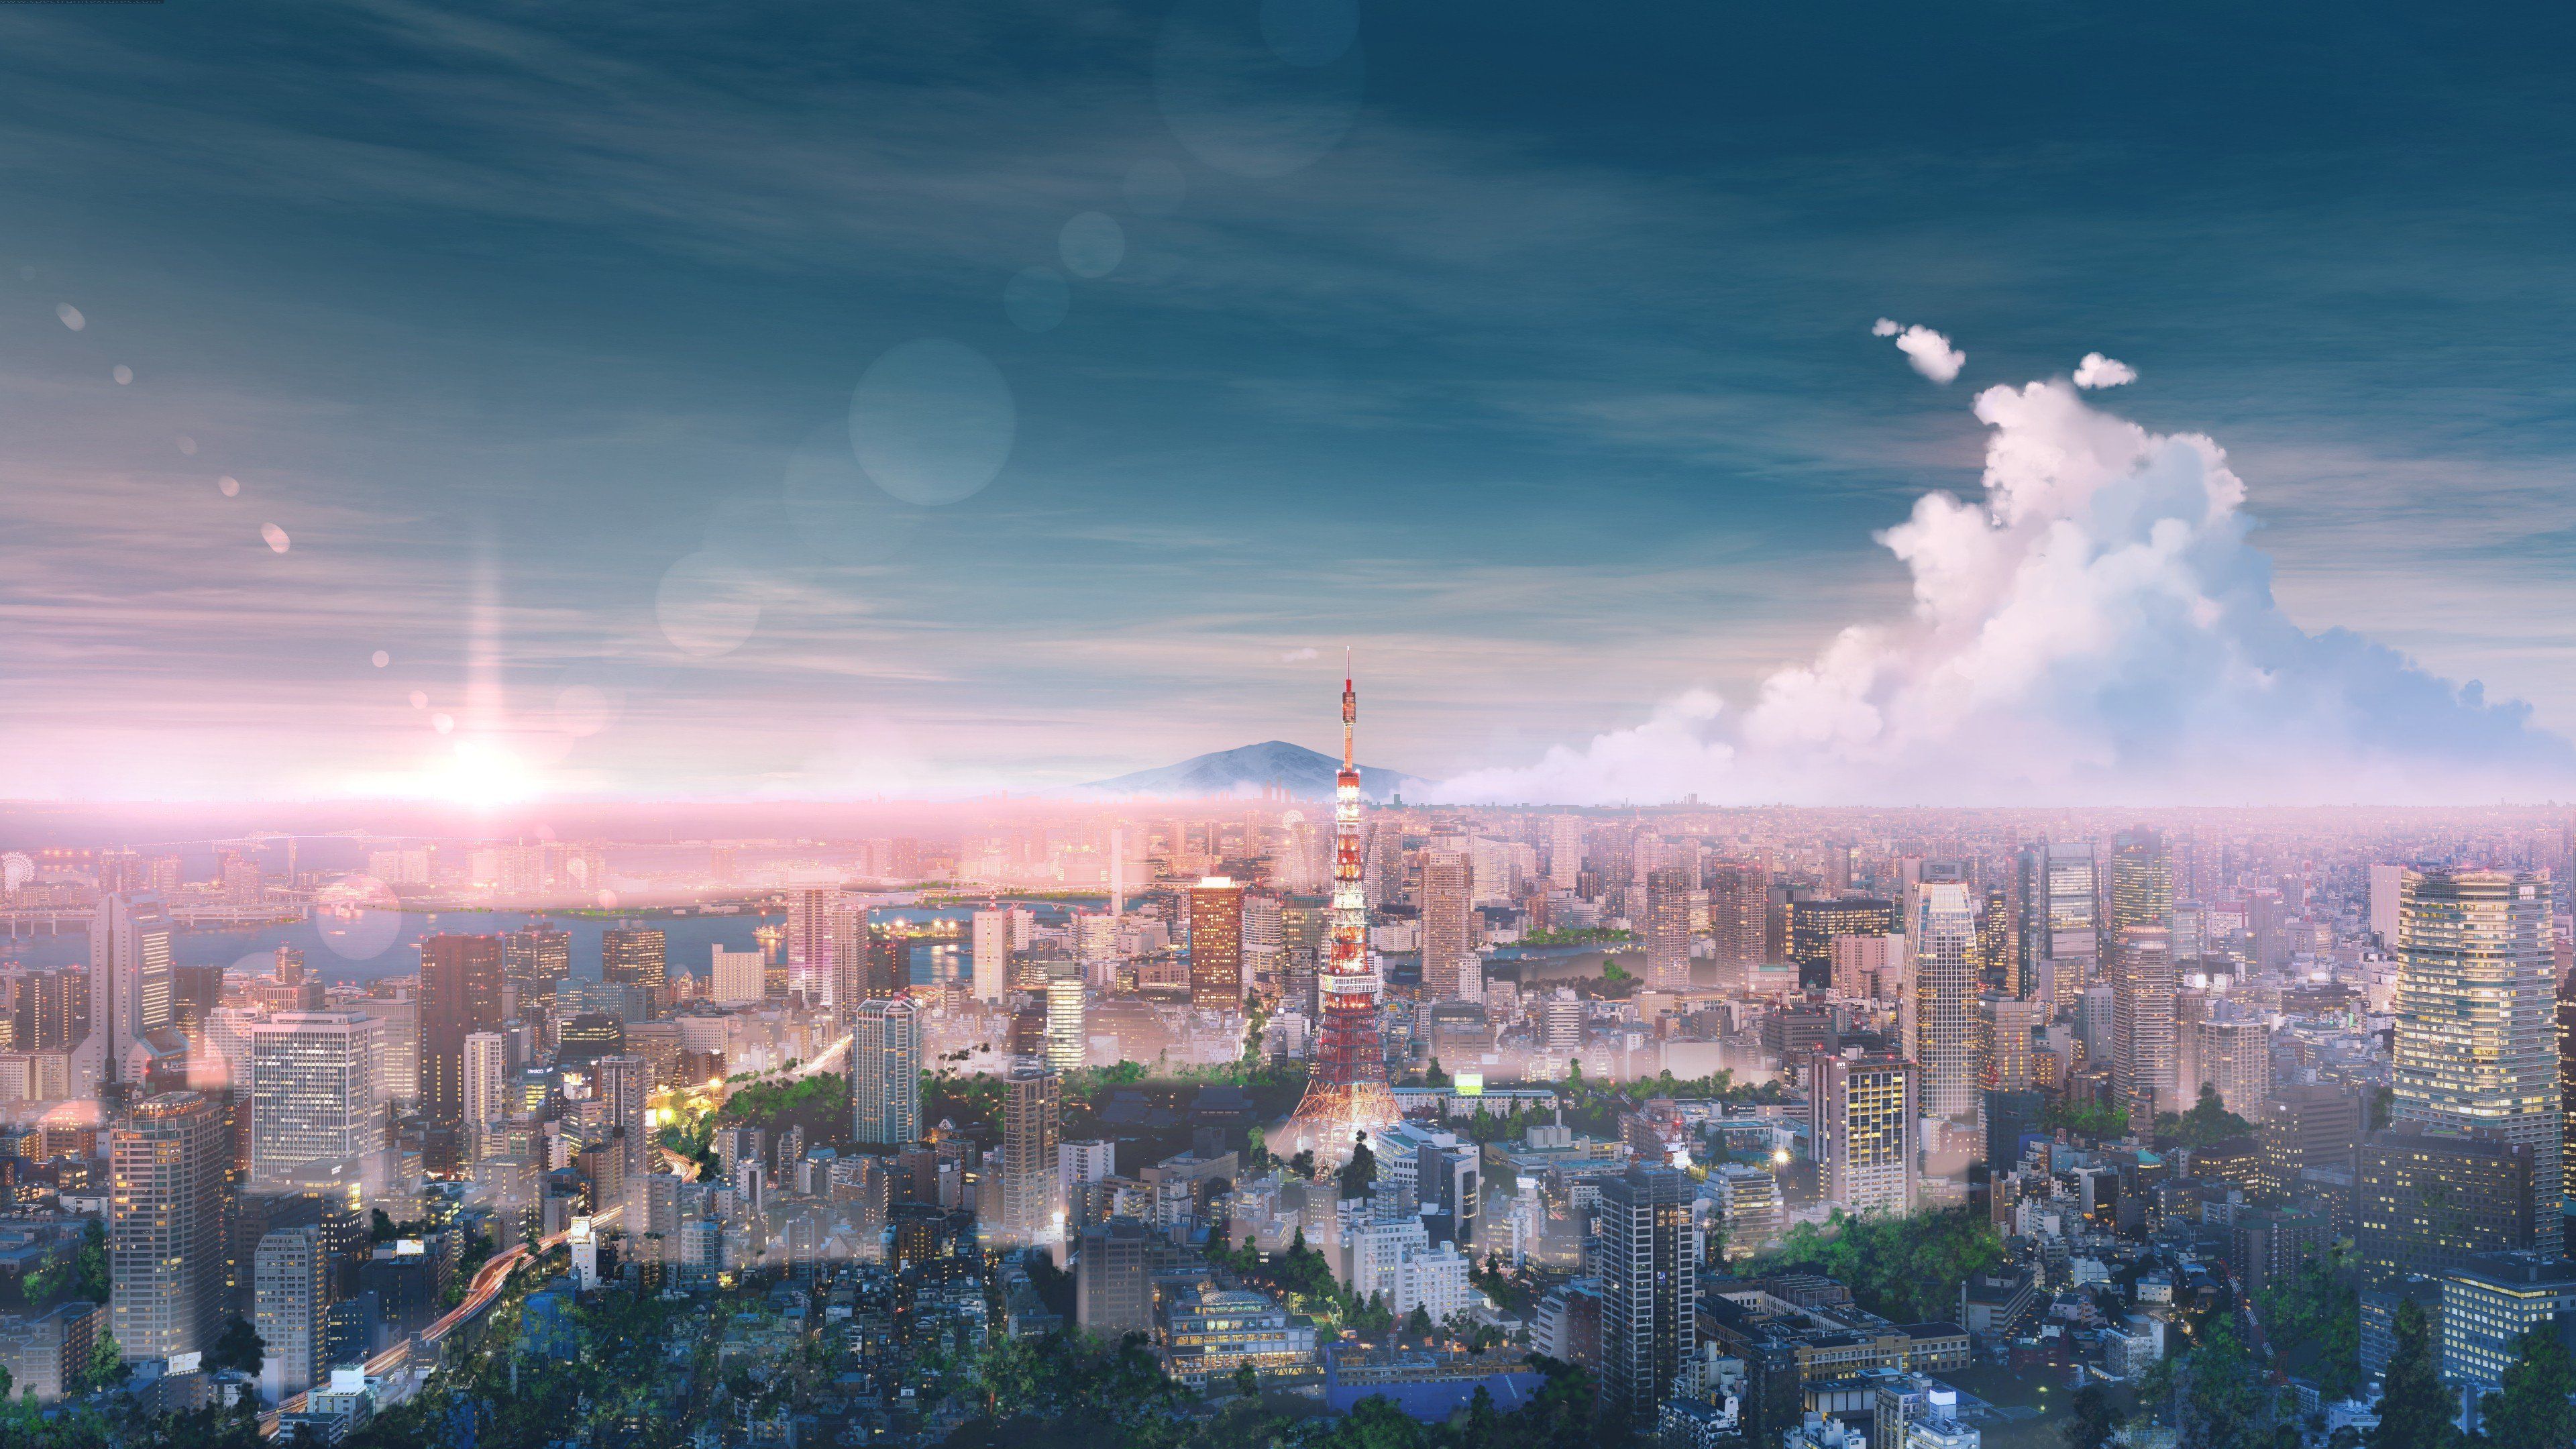 Tokyo Japan 4K wallpaper. Cityscape wallpaper, Cityscape, Anime art fantasy